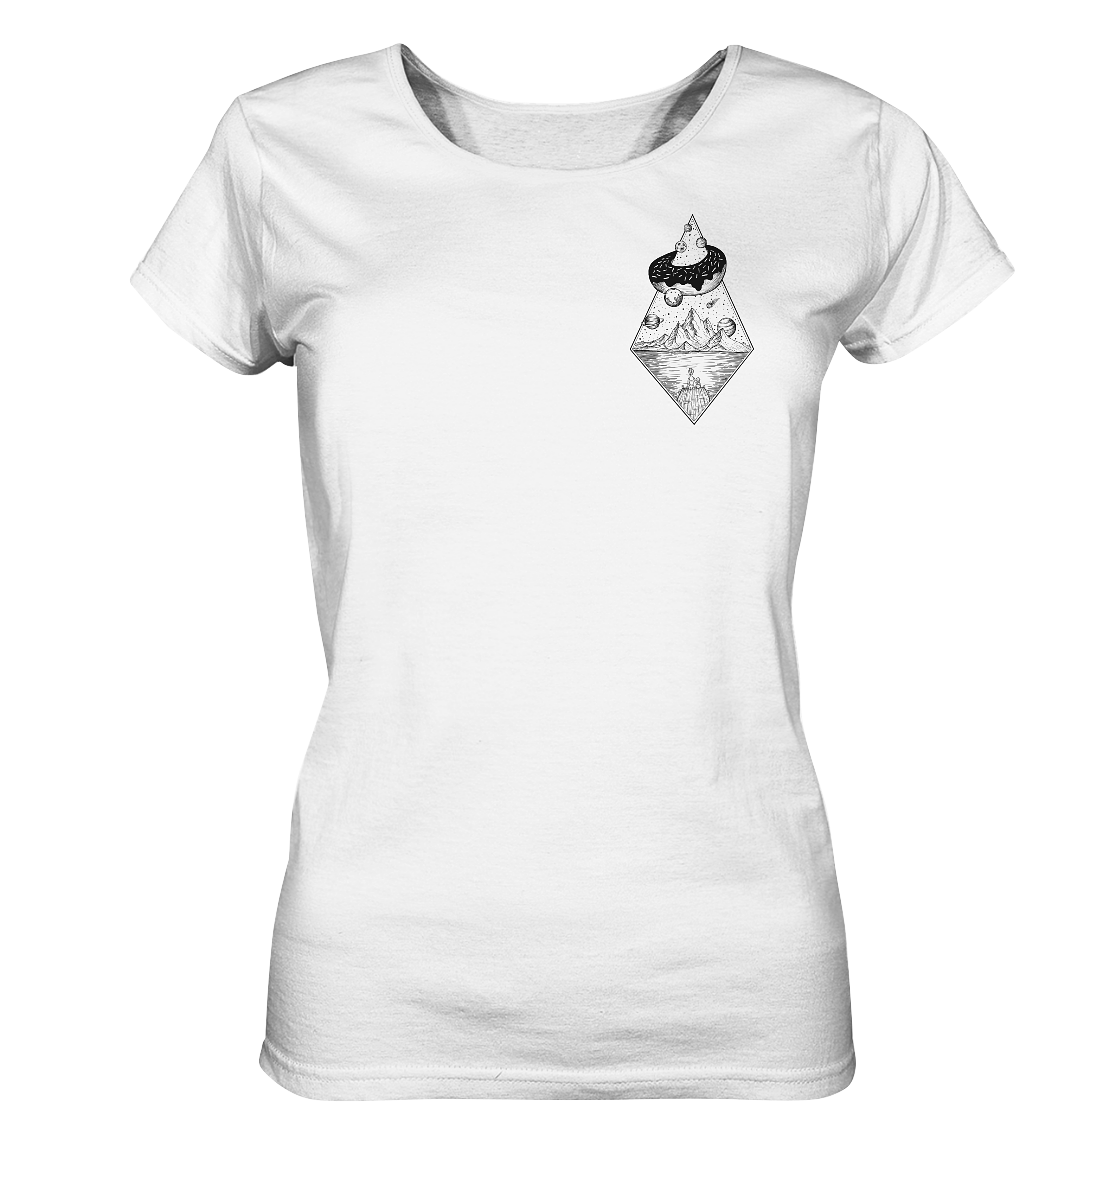 front-ladies-organic-shirt-f8f8f8-1116x.png